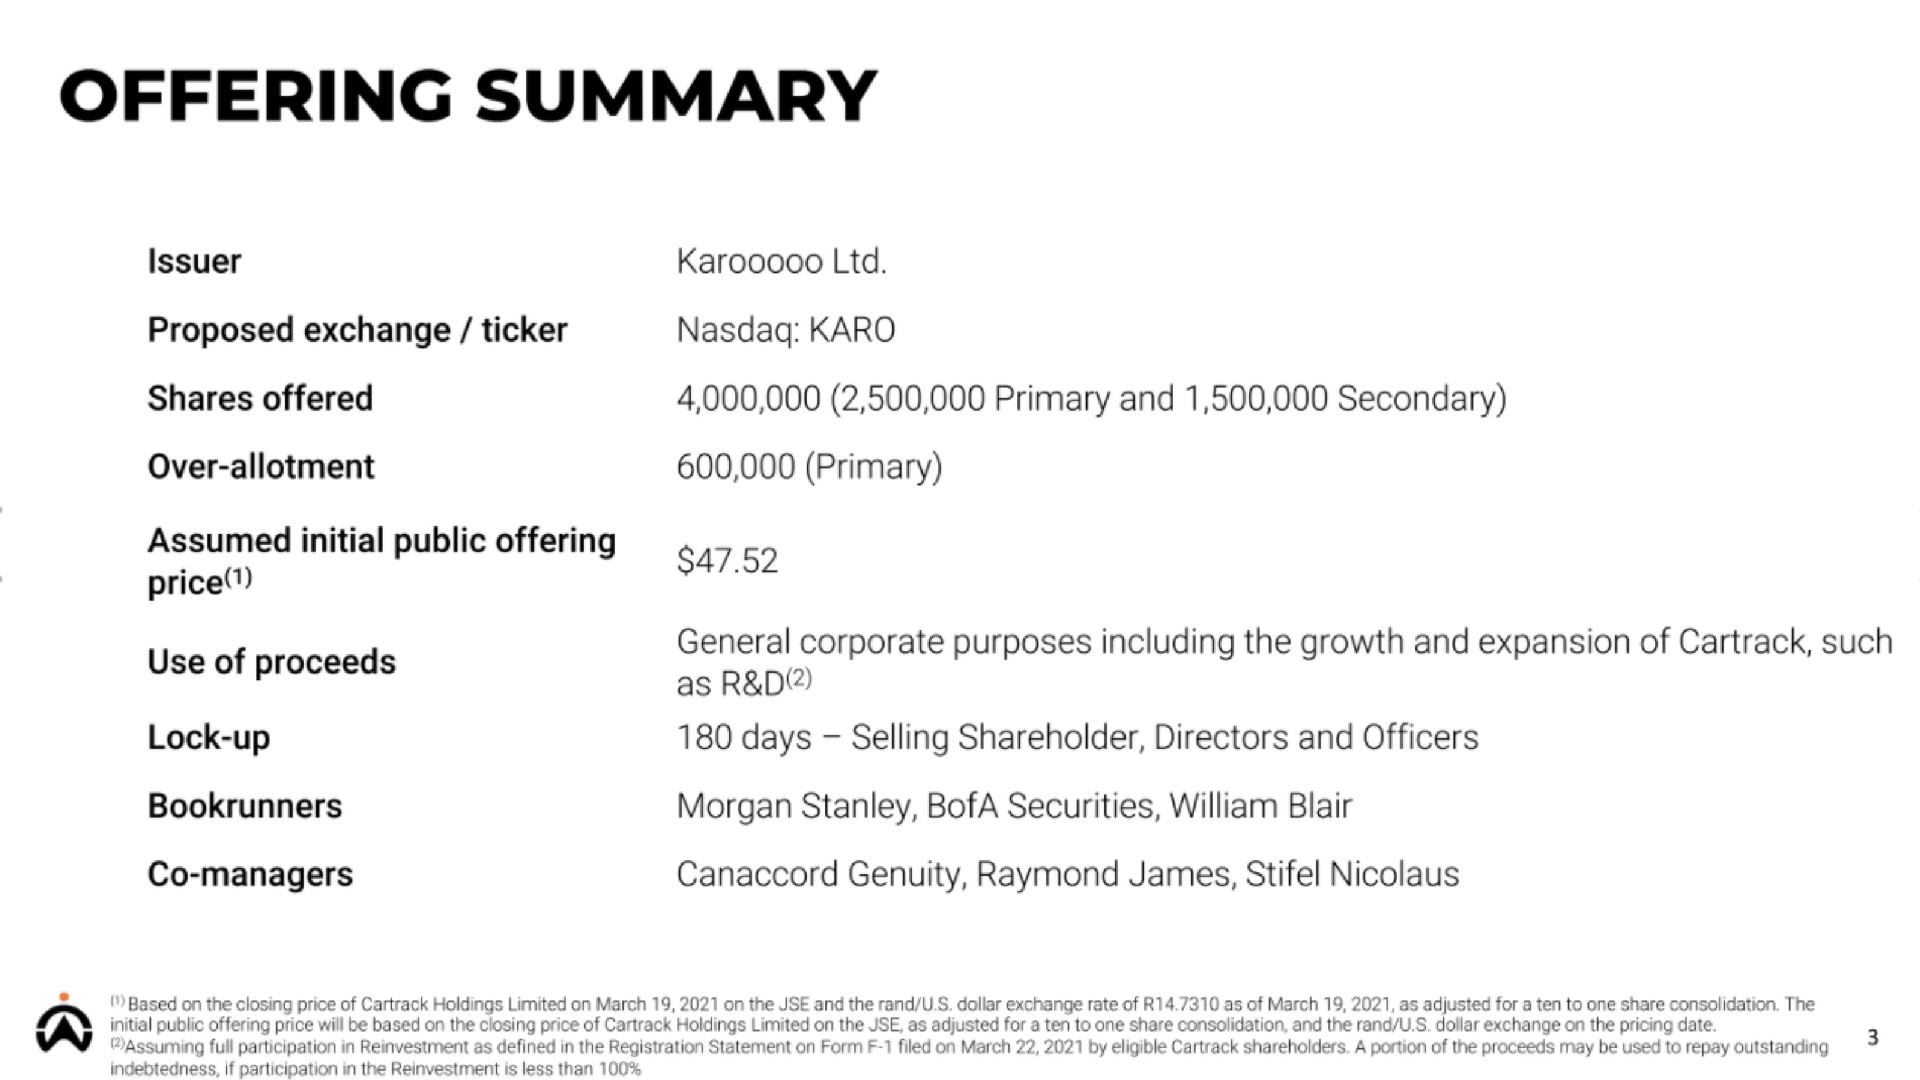 offering summary | Karooooo